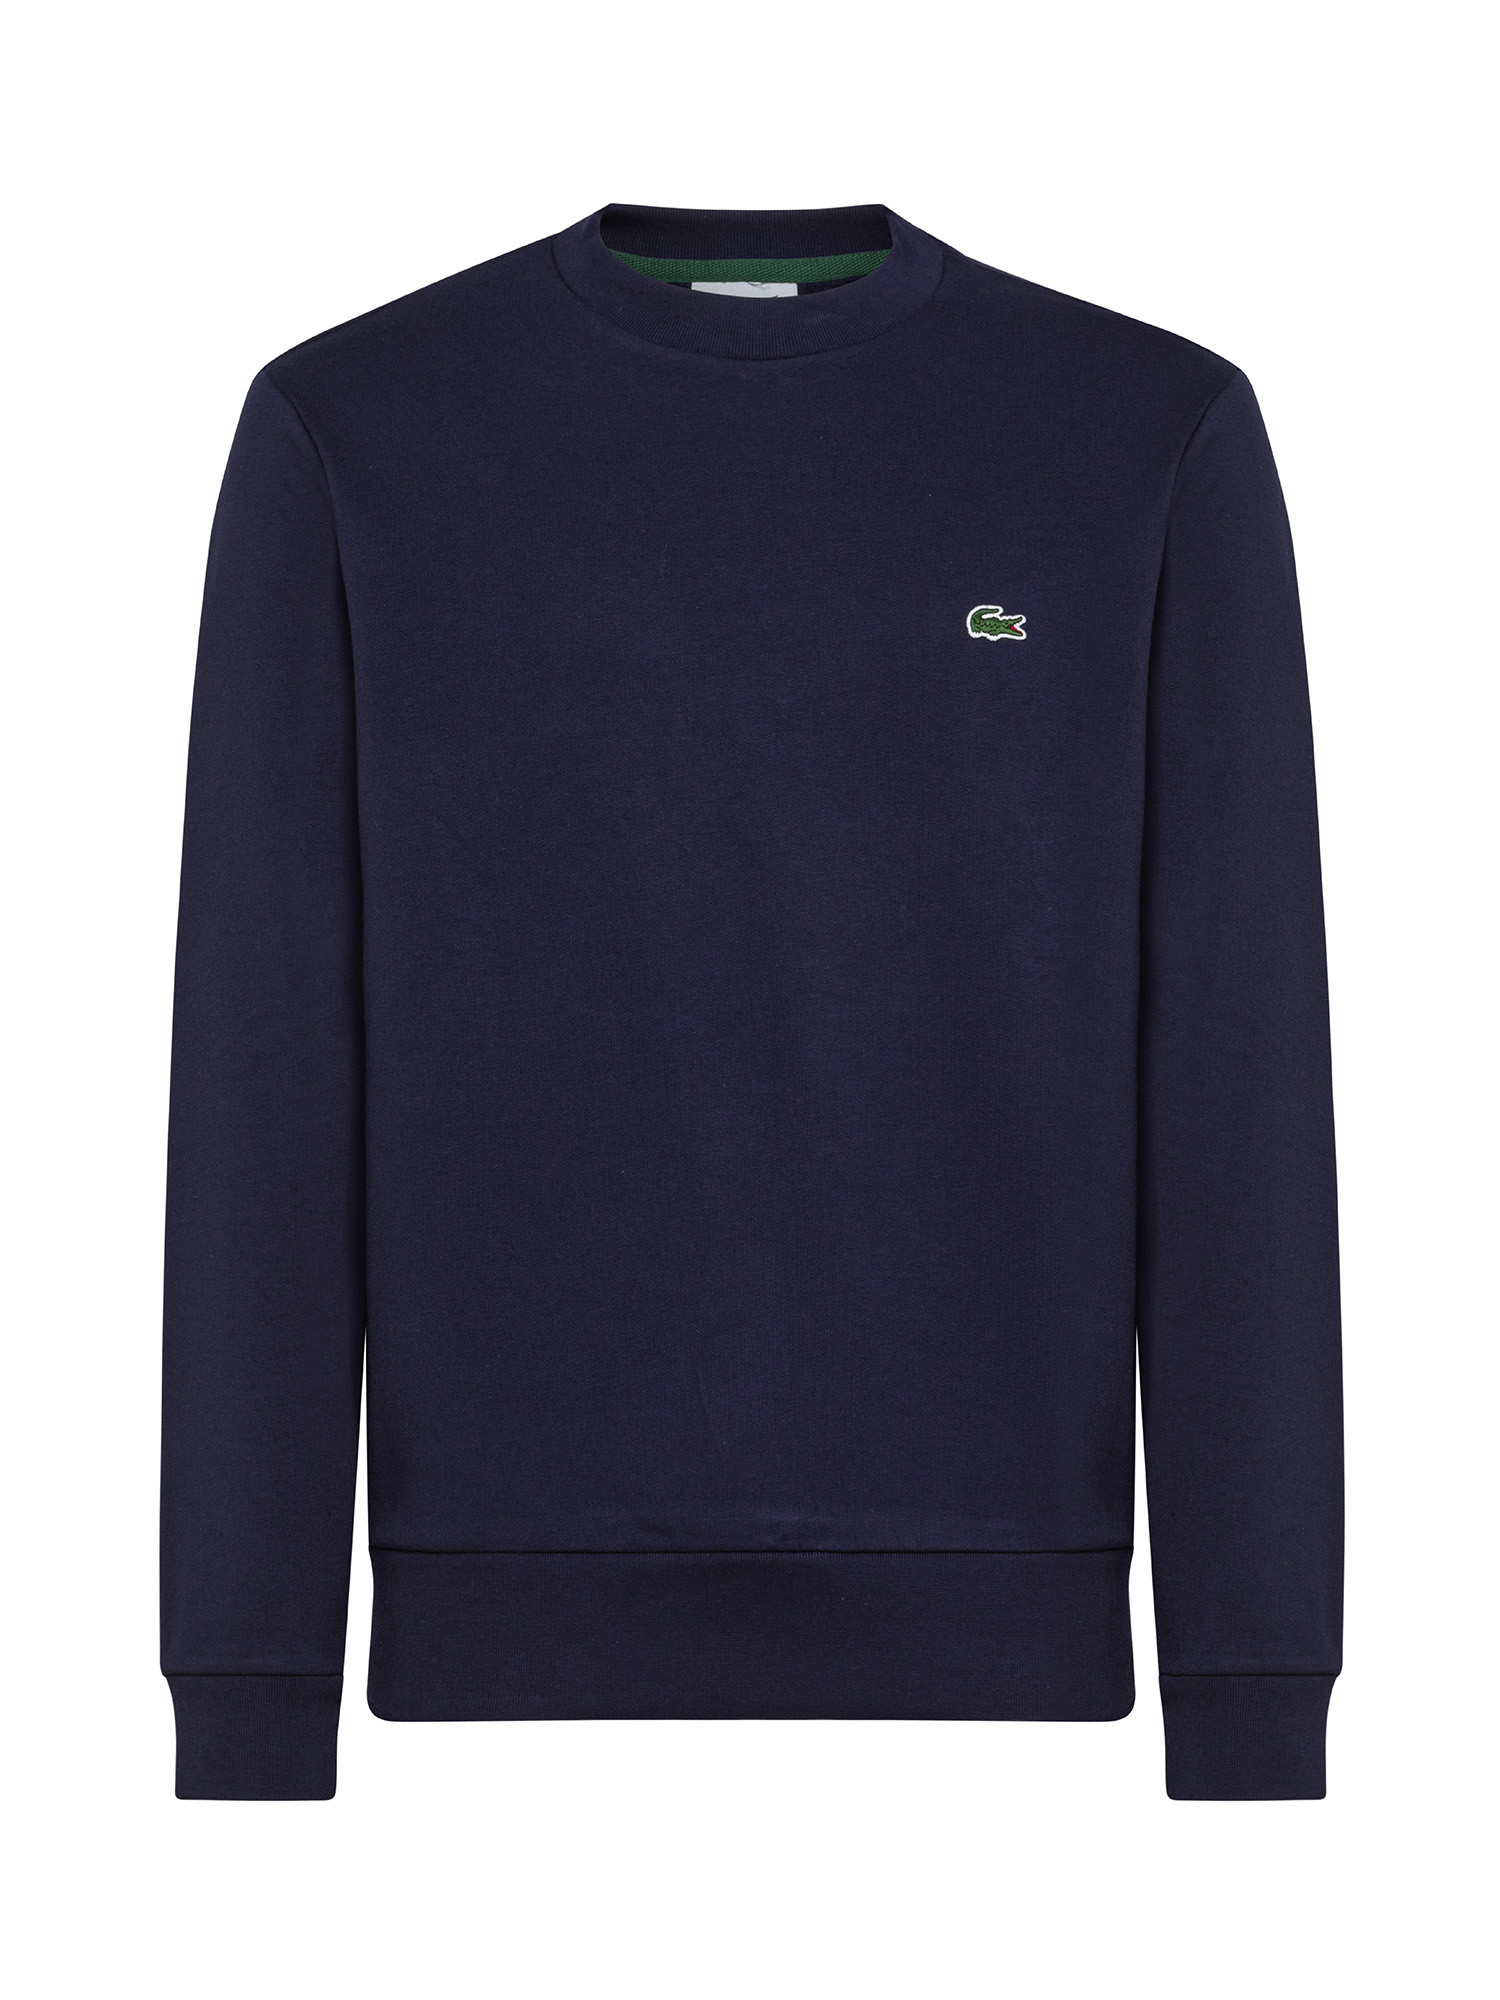 Lacoste - Sweatshirt in brushed organic cotton, Blue, large image number 0